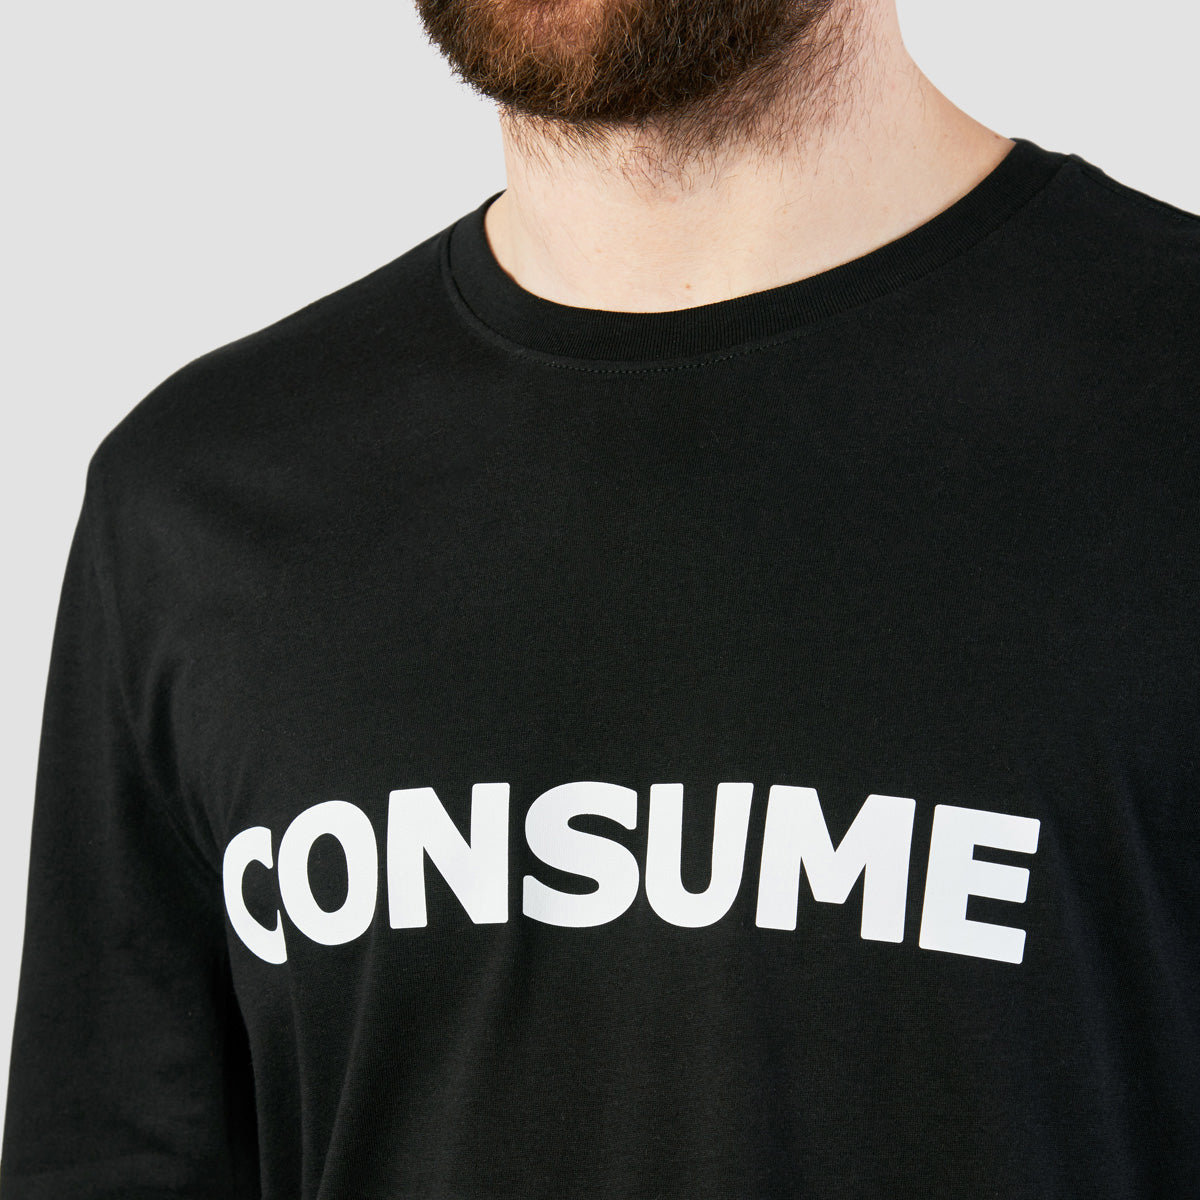 Consume Logo Longsleeve T-Shirt Black/White